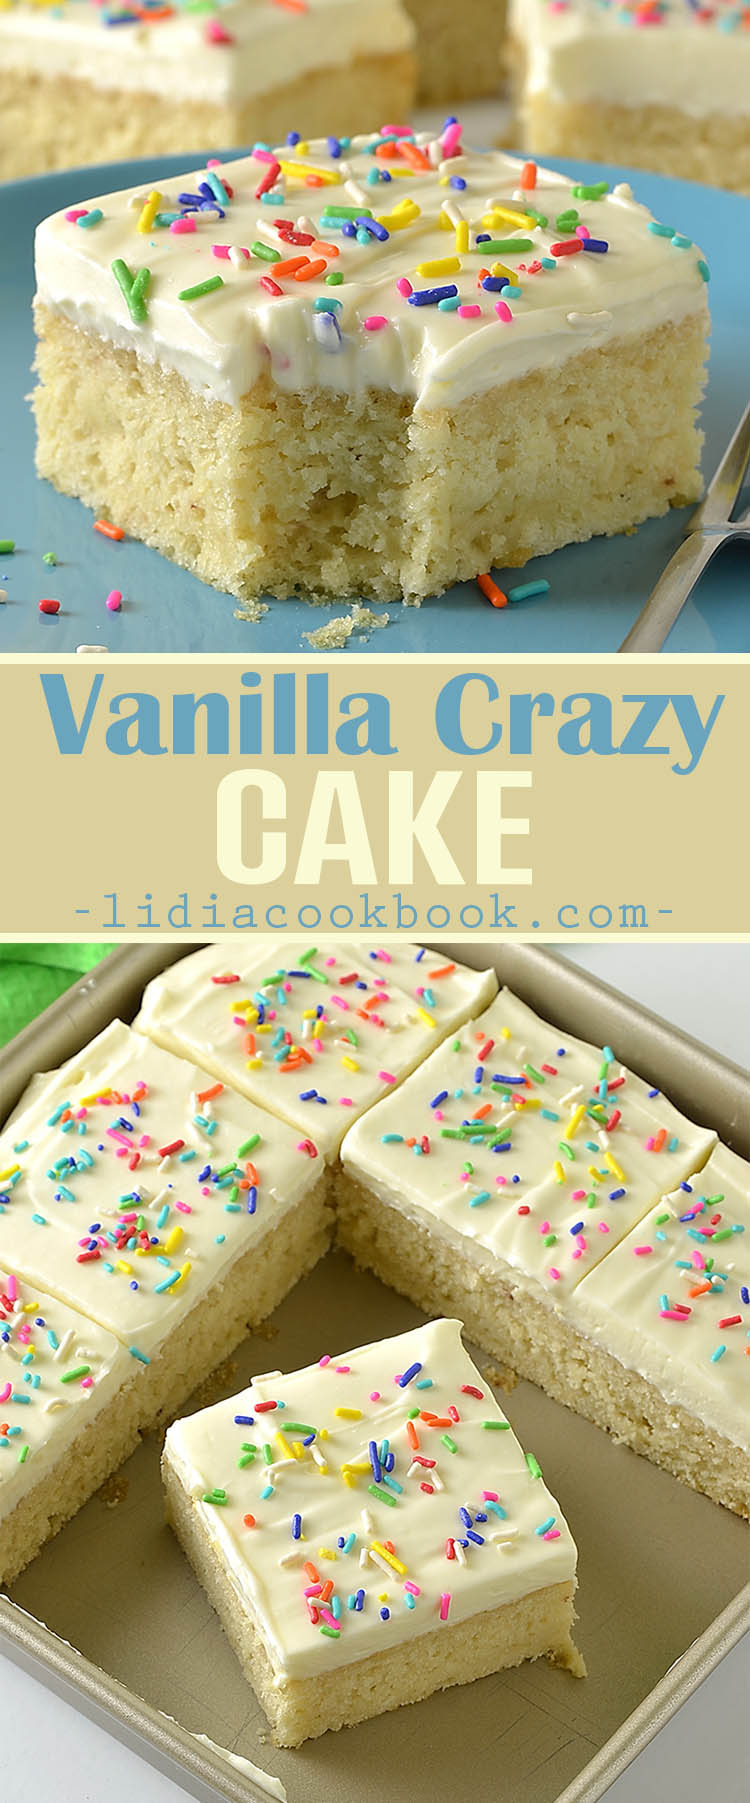 Vanilla Crazy Cake - Lidia's Cookbook